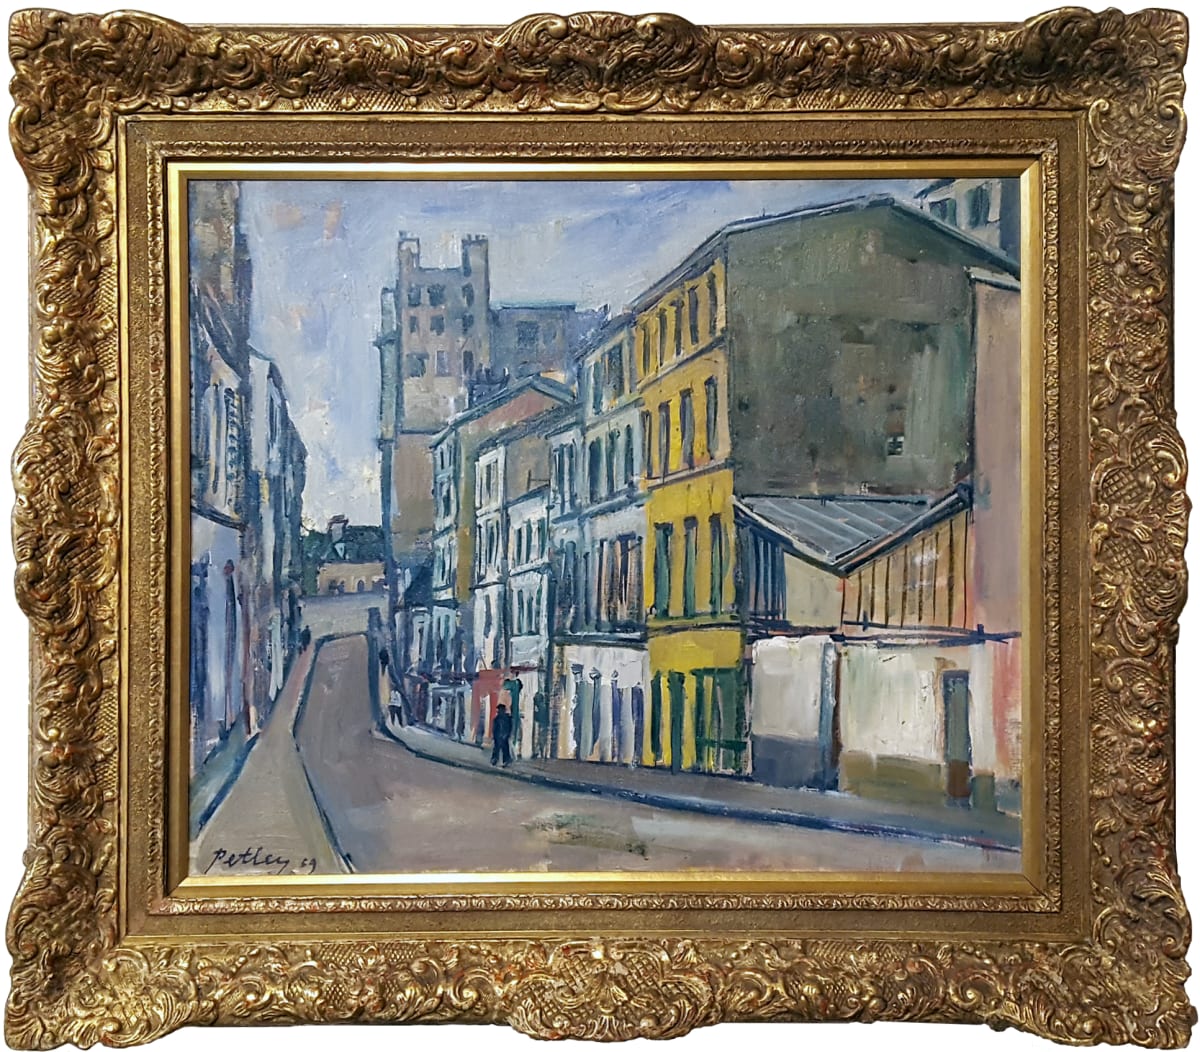 0295 - Rue de trois Freres, Montmarte by Llewellyn Petley-Jones (1908-1986) 